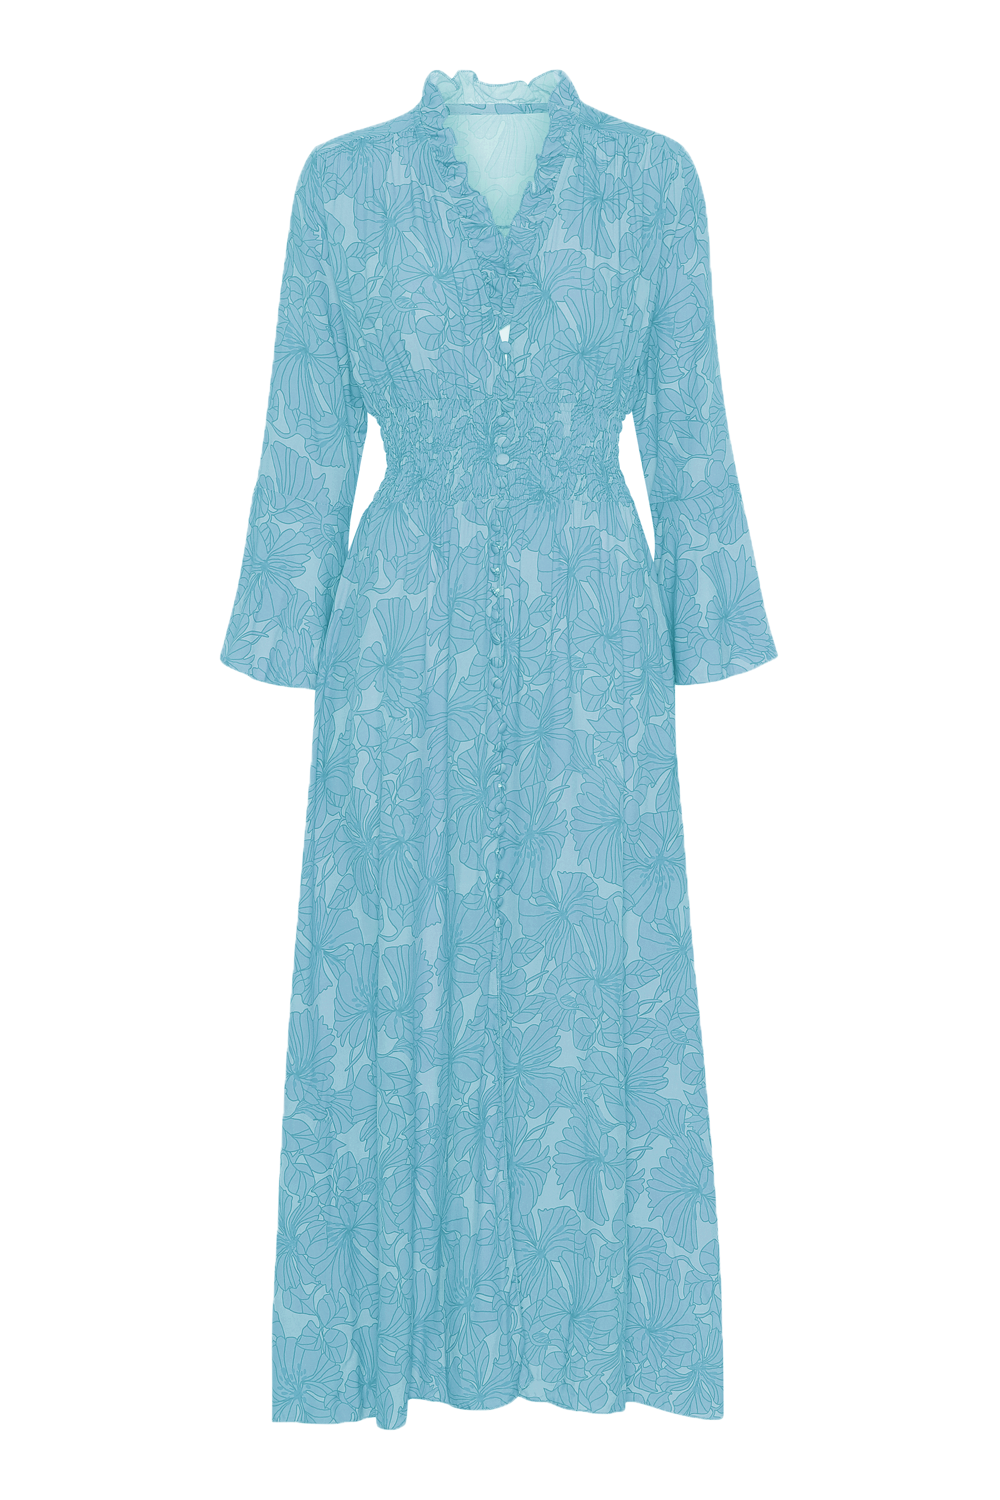 Sally Long Dress Light Blue Printed - Sample